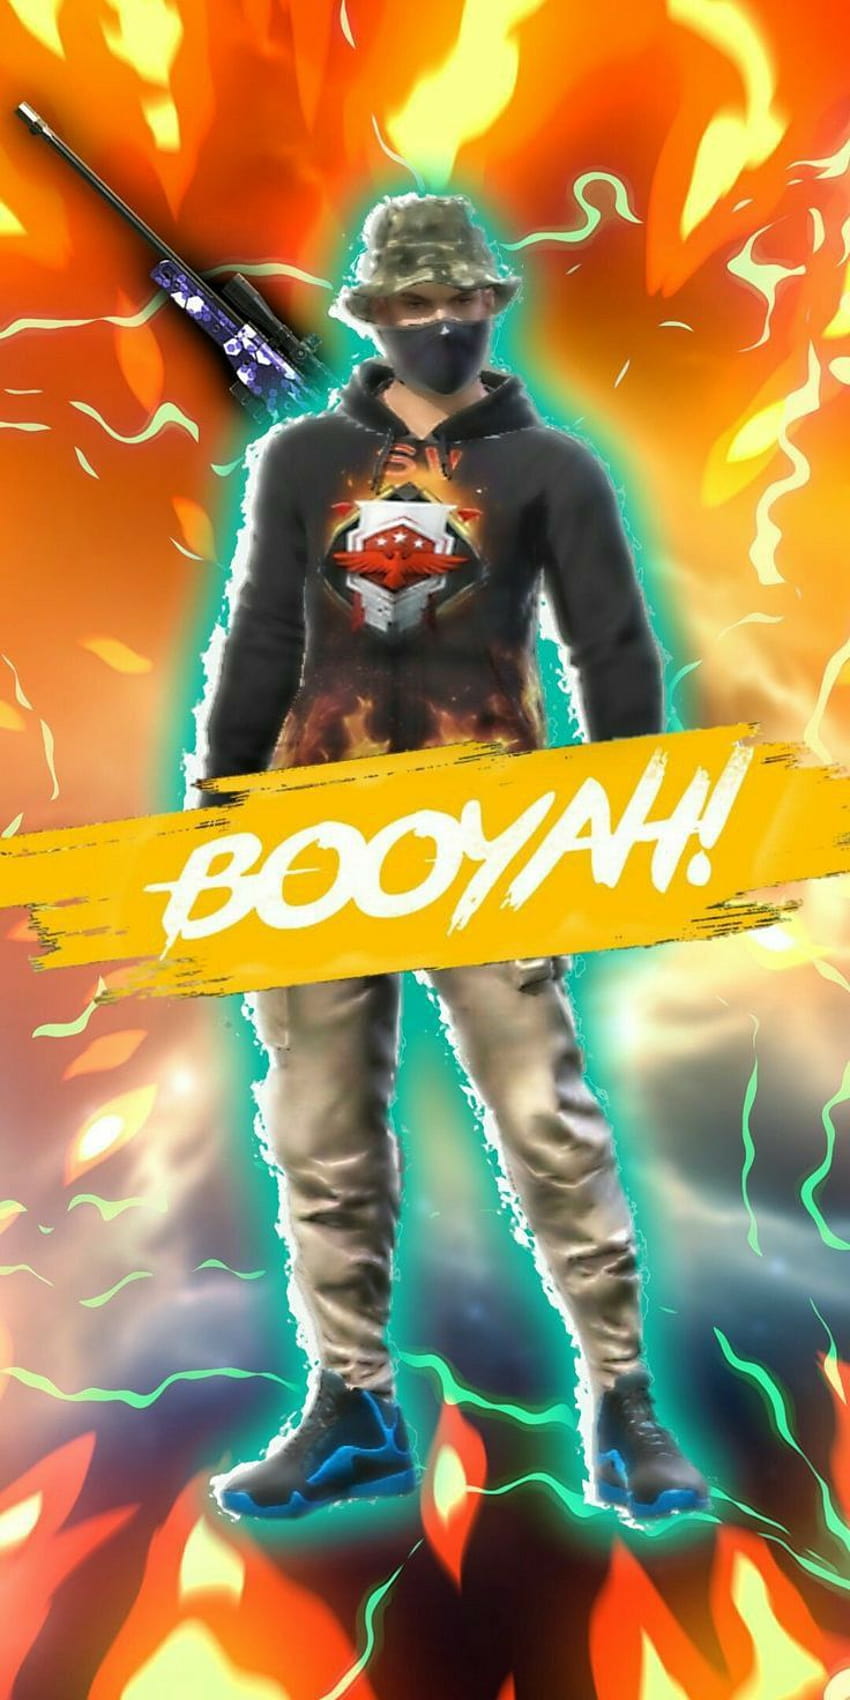 Booyah! in 2021, booyah logo app HD phone wallpaper